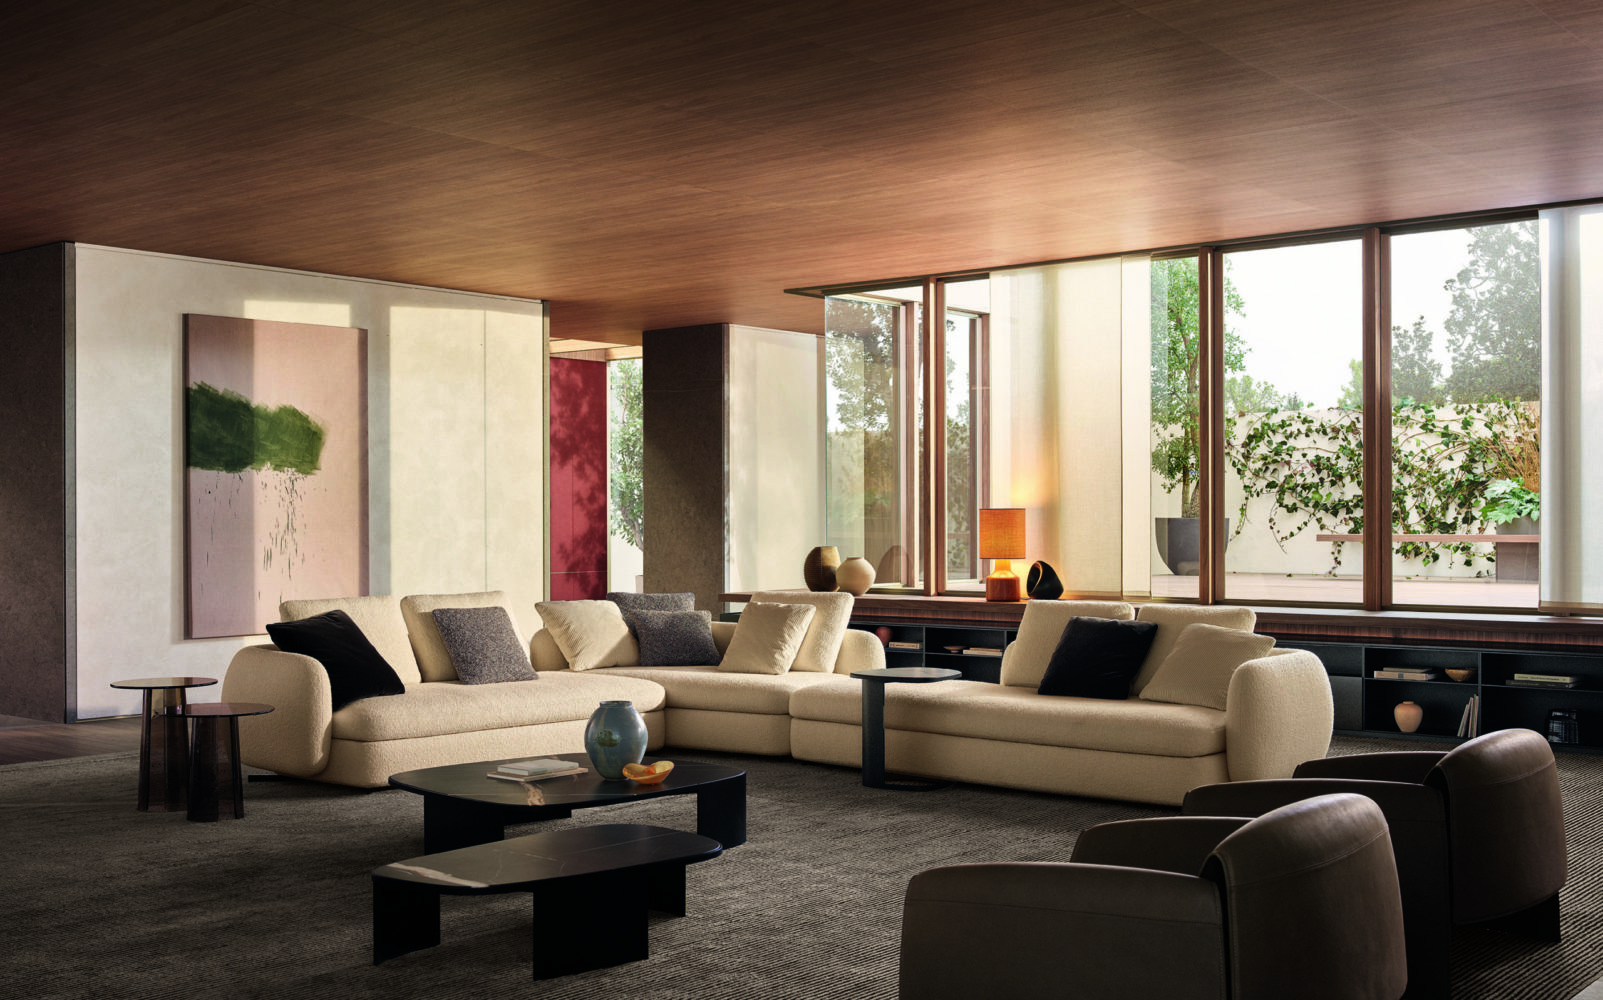 Saint Germain sofa